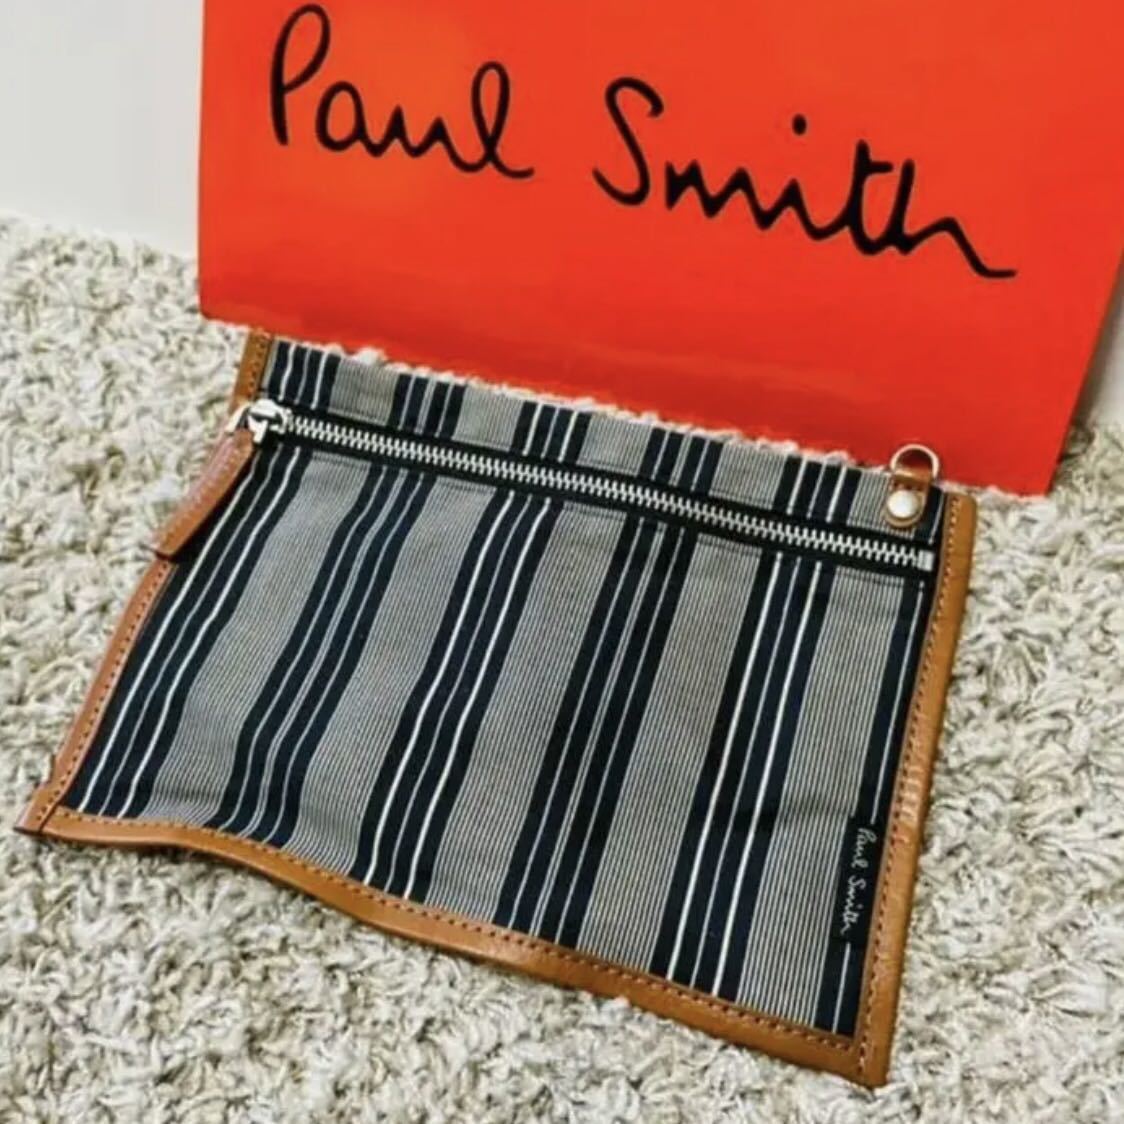  superior article Paul Smith PaulSmith leather stripe pouch Denim indigo navy men's lady's unisex purse bag 8534